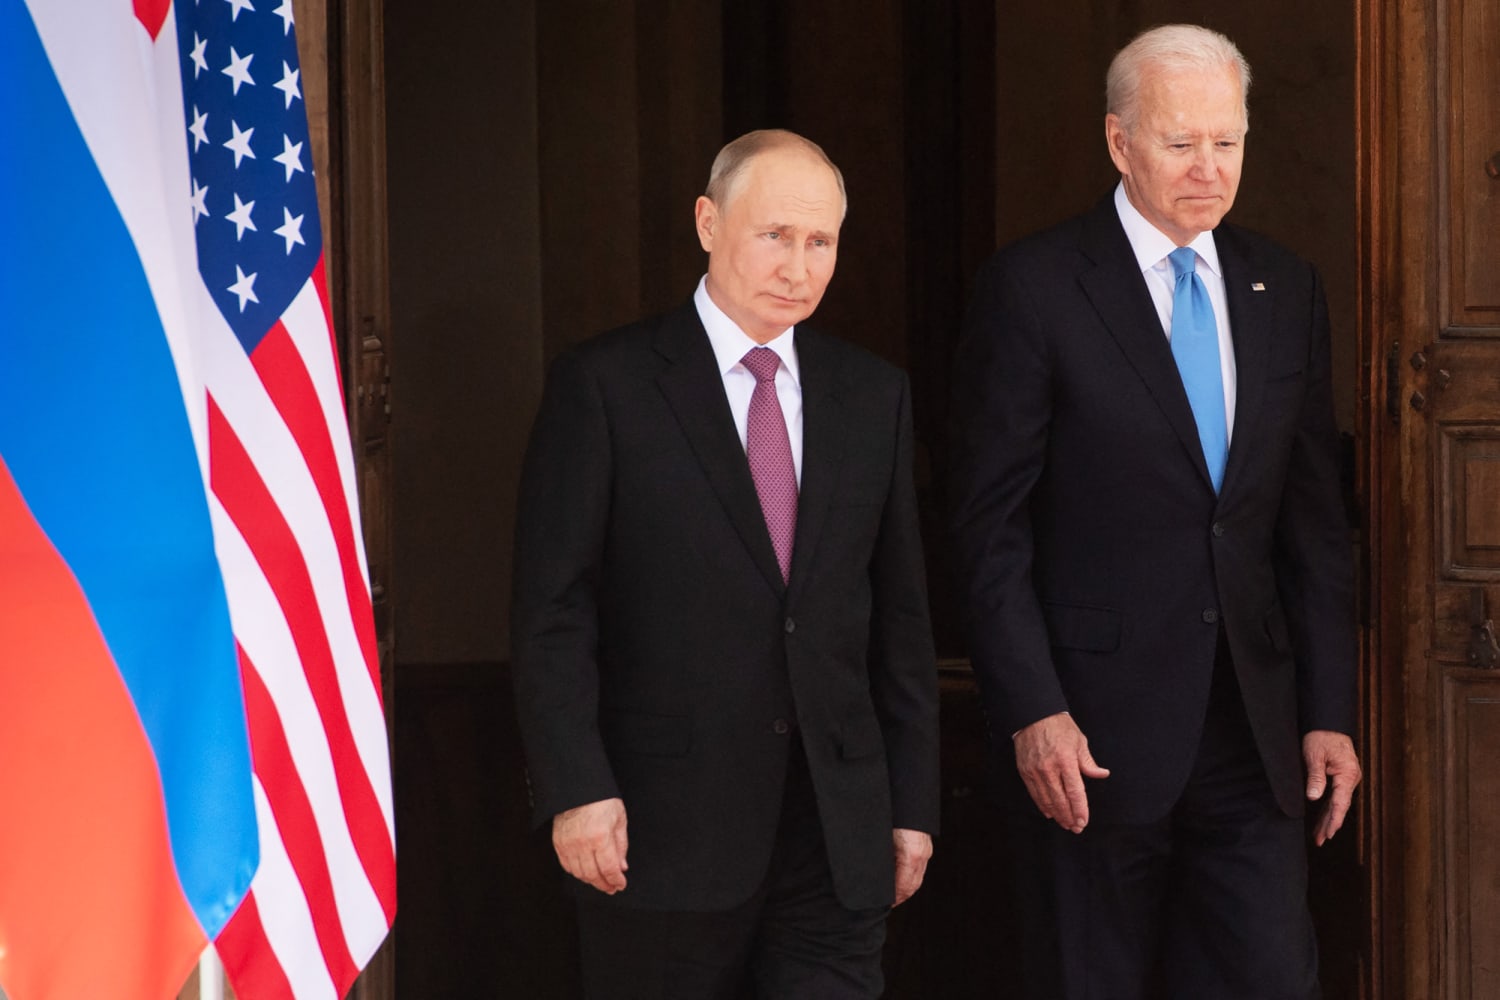 Biden tells Putin U.S. and allies will ‘respond decisively’ if Russia moves on Ukraine